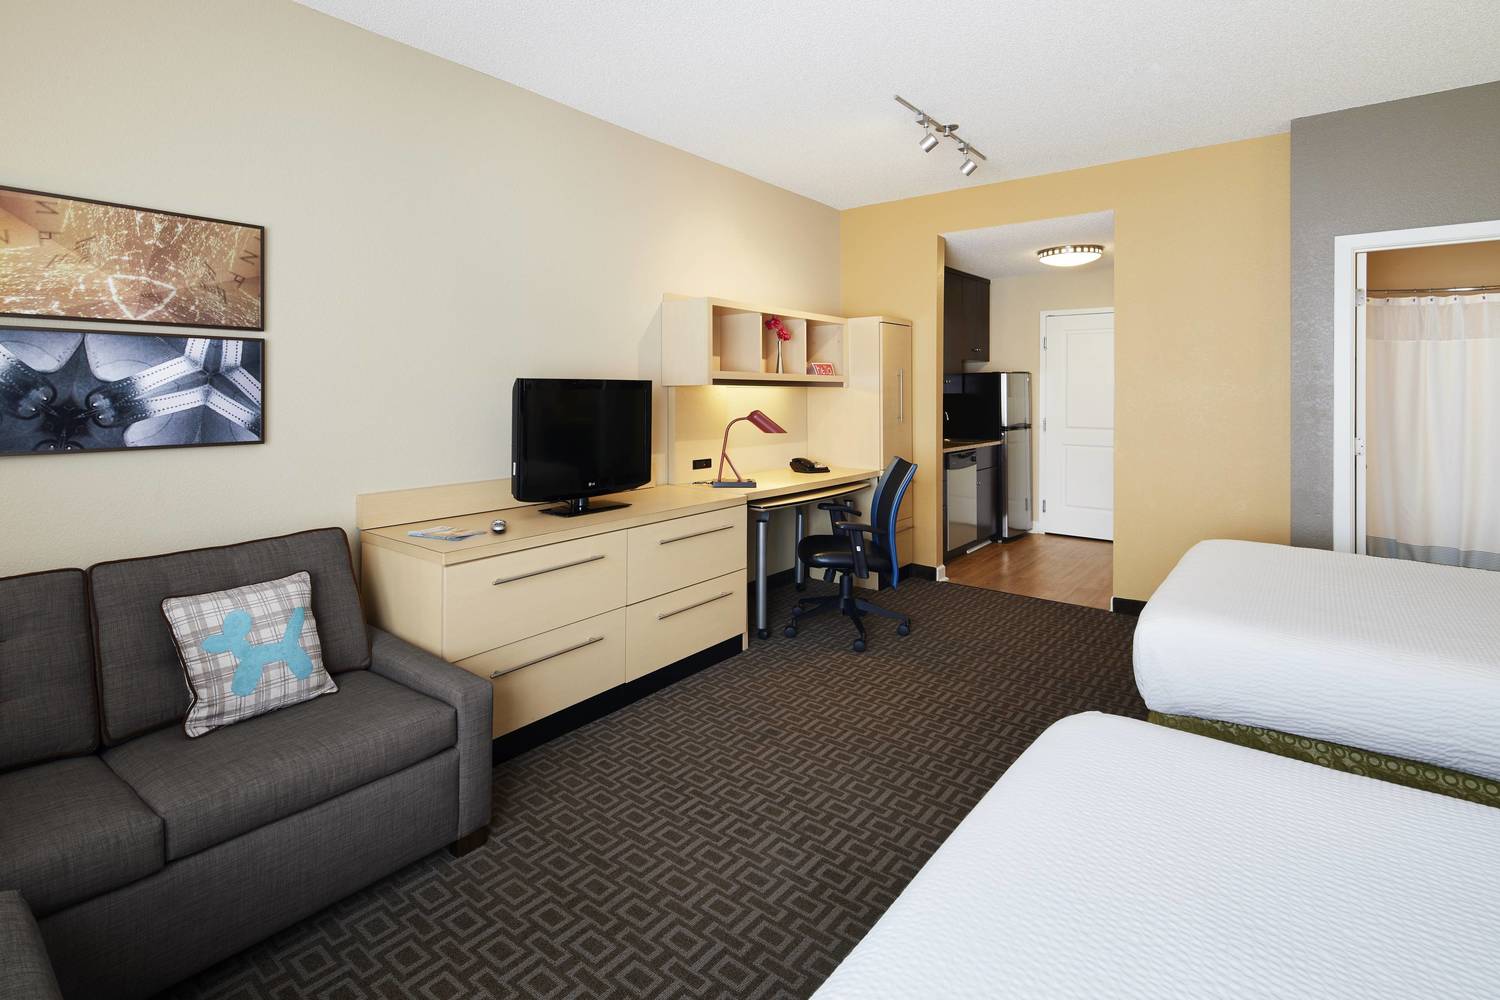 TownePlace Suites Harrisburg Hershey, Harrisburg, PA Jobs | Hospitality